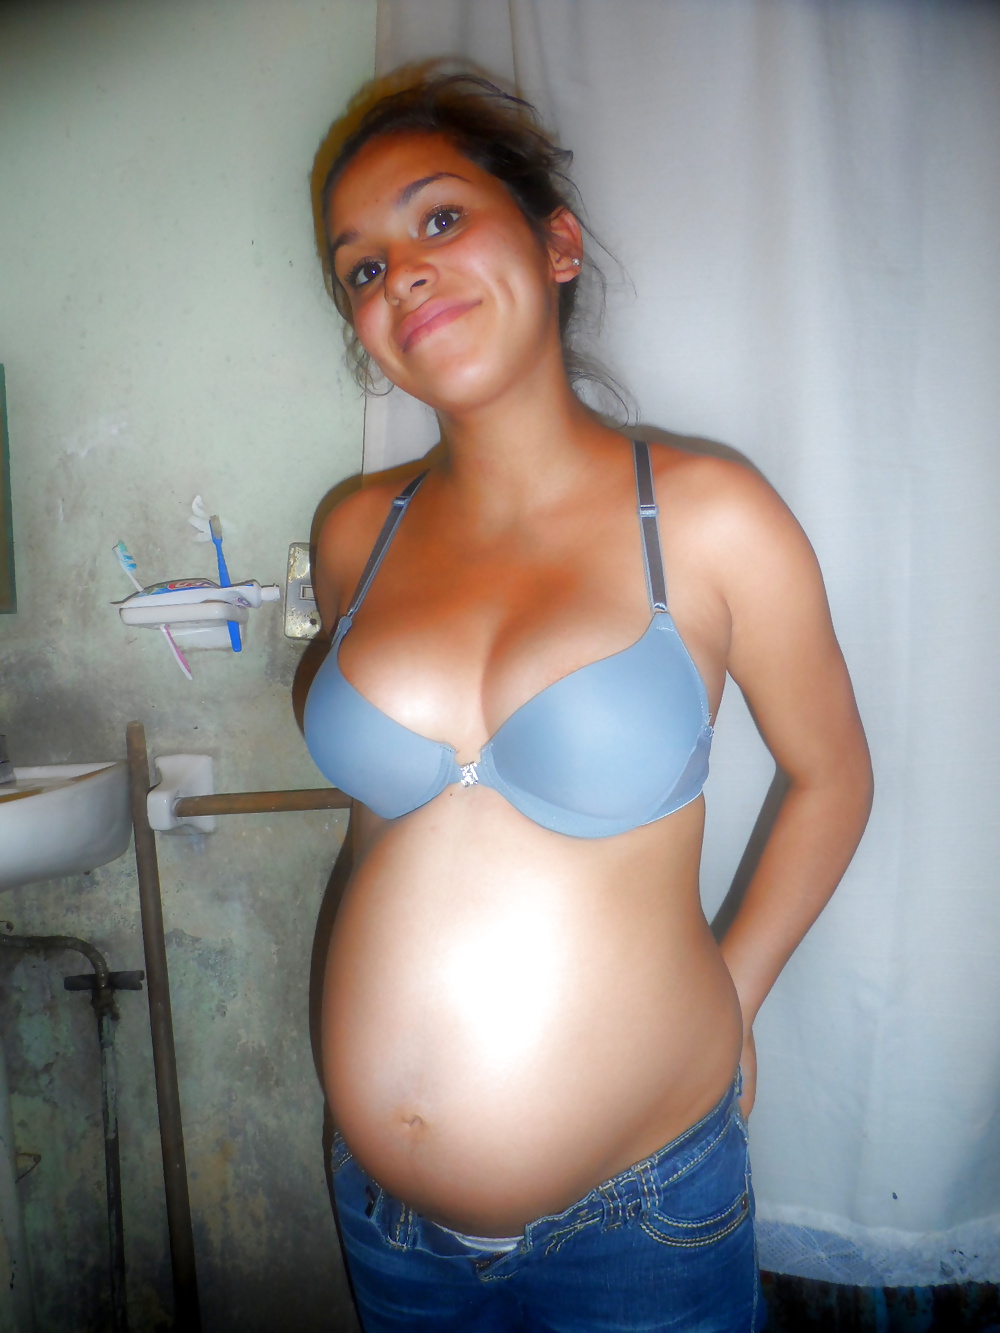 Mexican Pregnant Boobs - Pregnant Mexican Girls Porn Pictures, XXX Photos, Sex Images #1854212 -  PICTOA